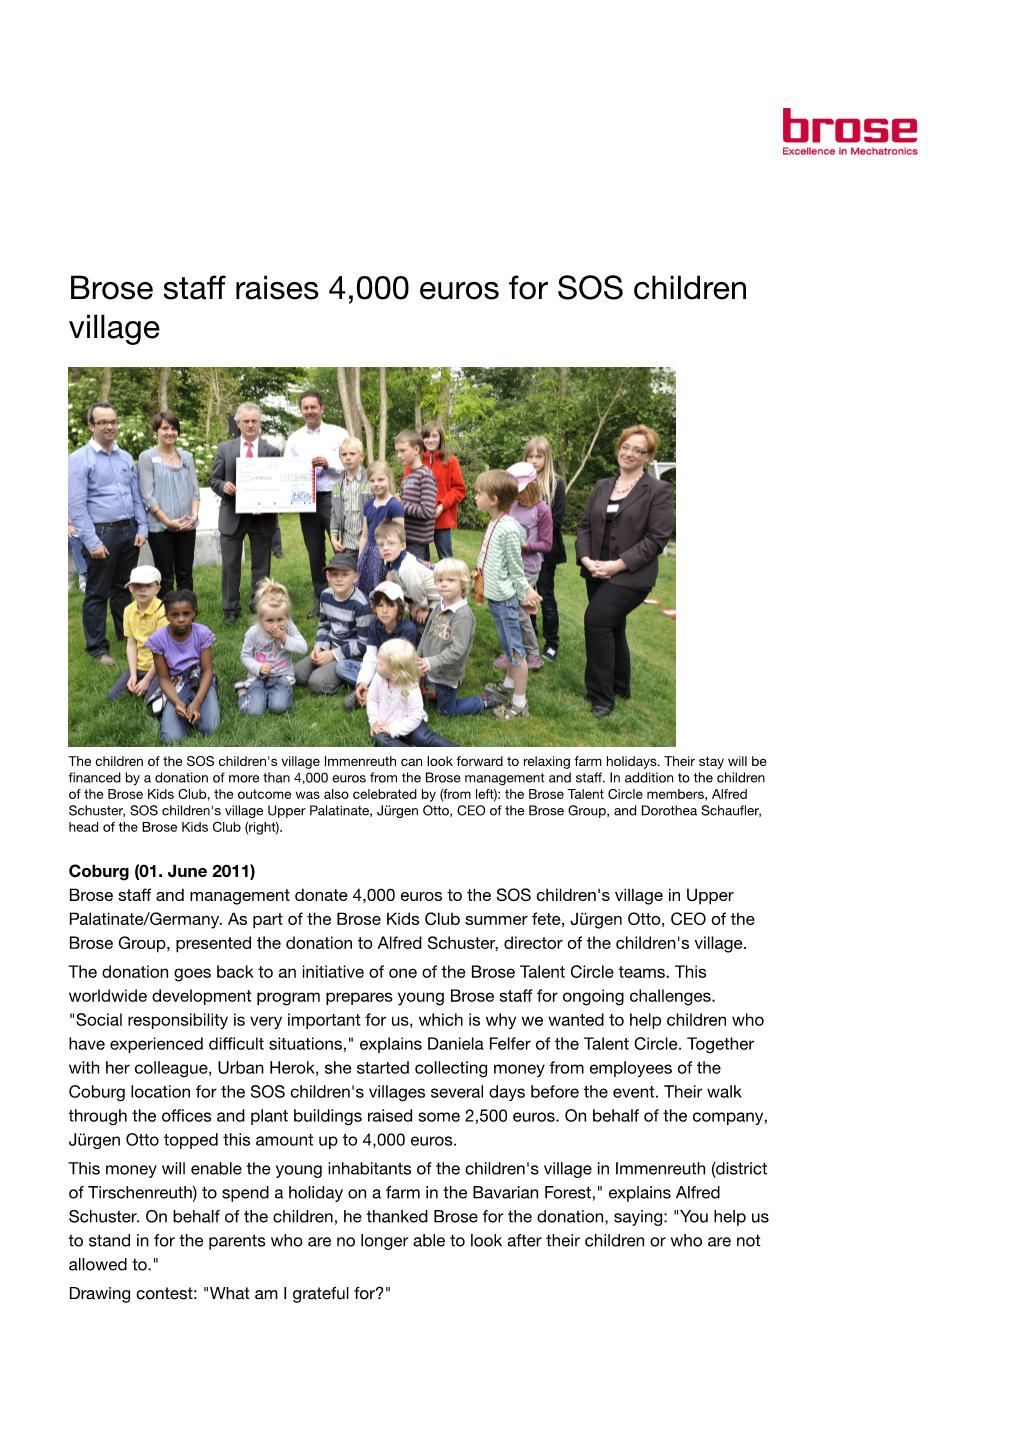 Brose Staff Raises 4,000 Euros for SOS Children Village